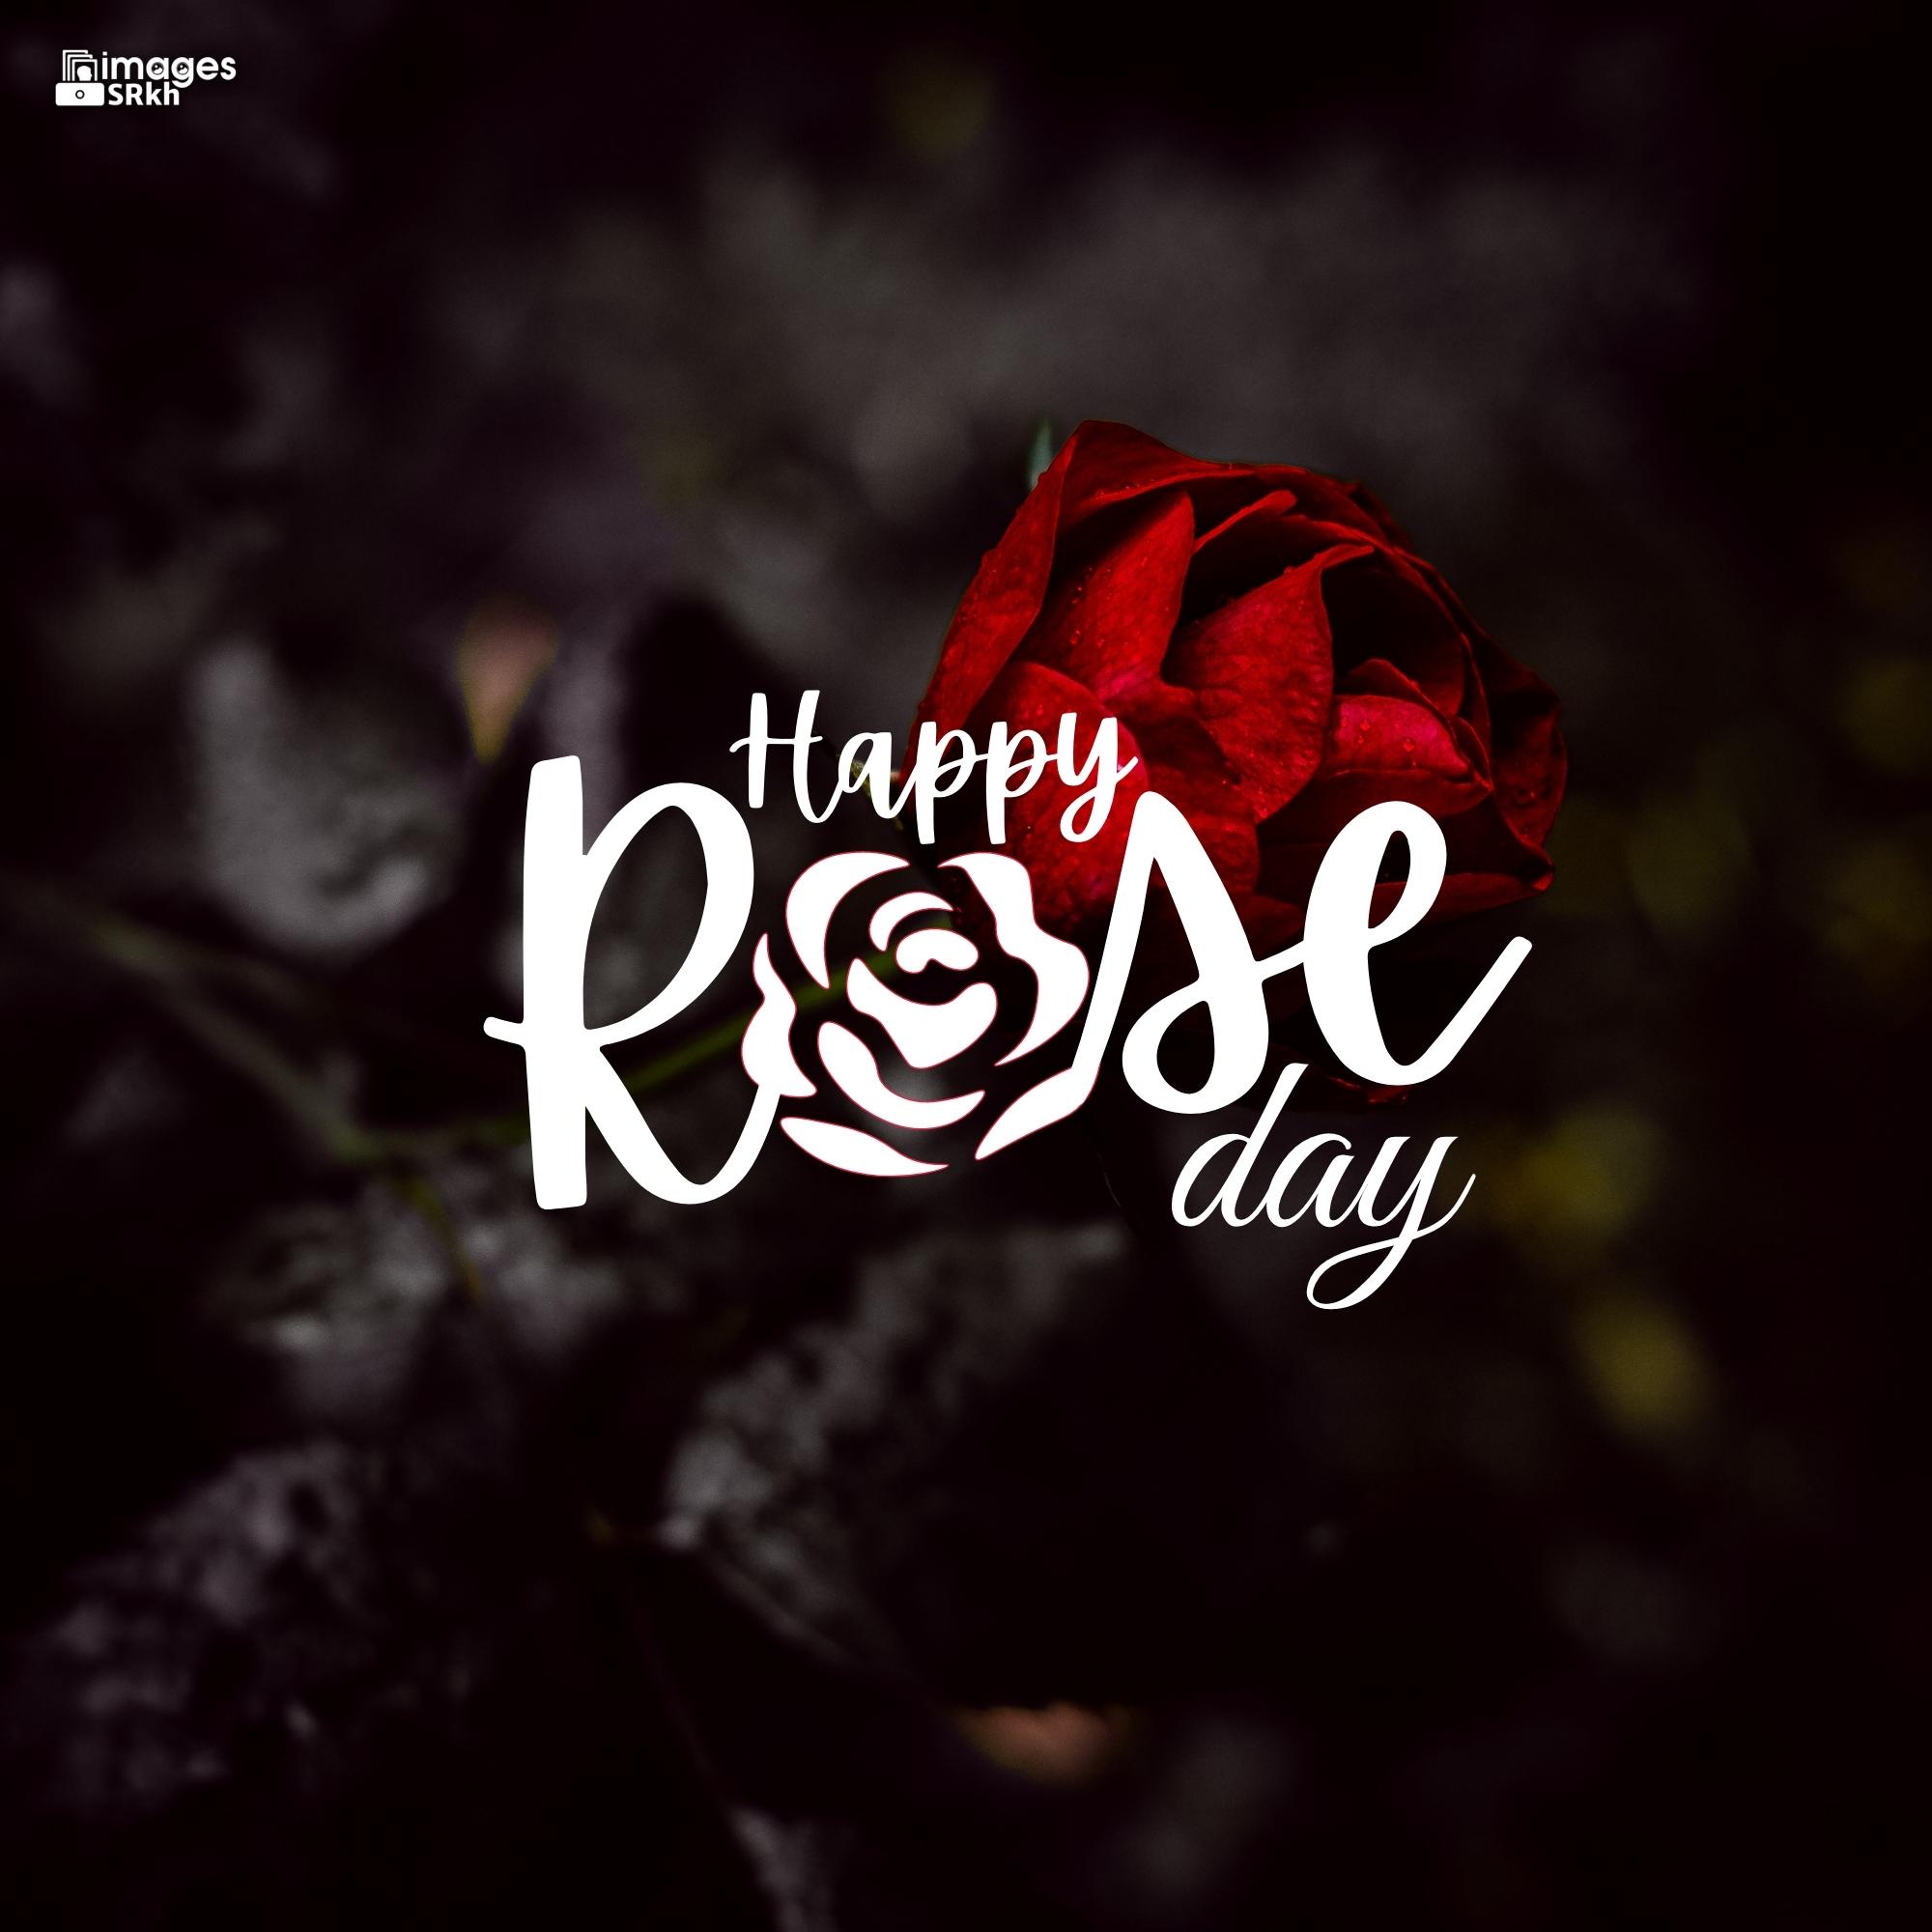 🔥 Happy Rose Day Image Hd Download (24) Download free - Images SRkh